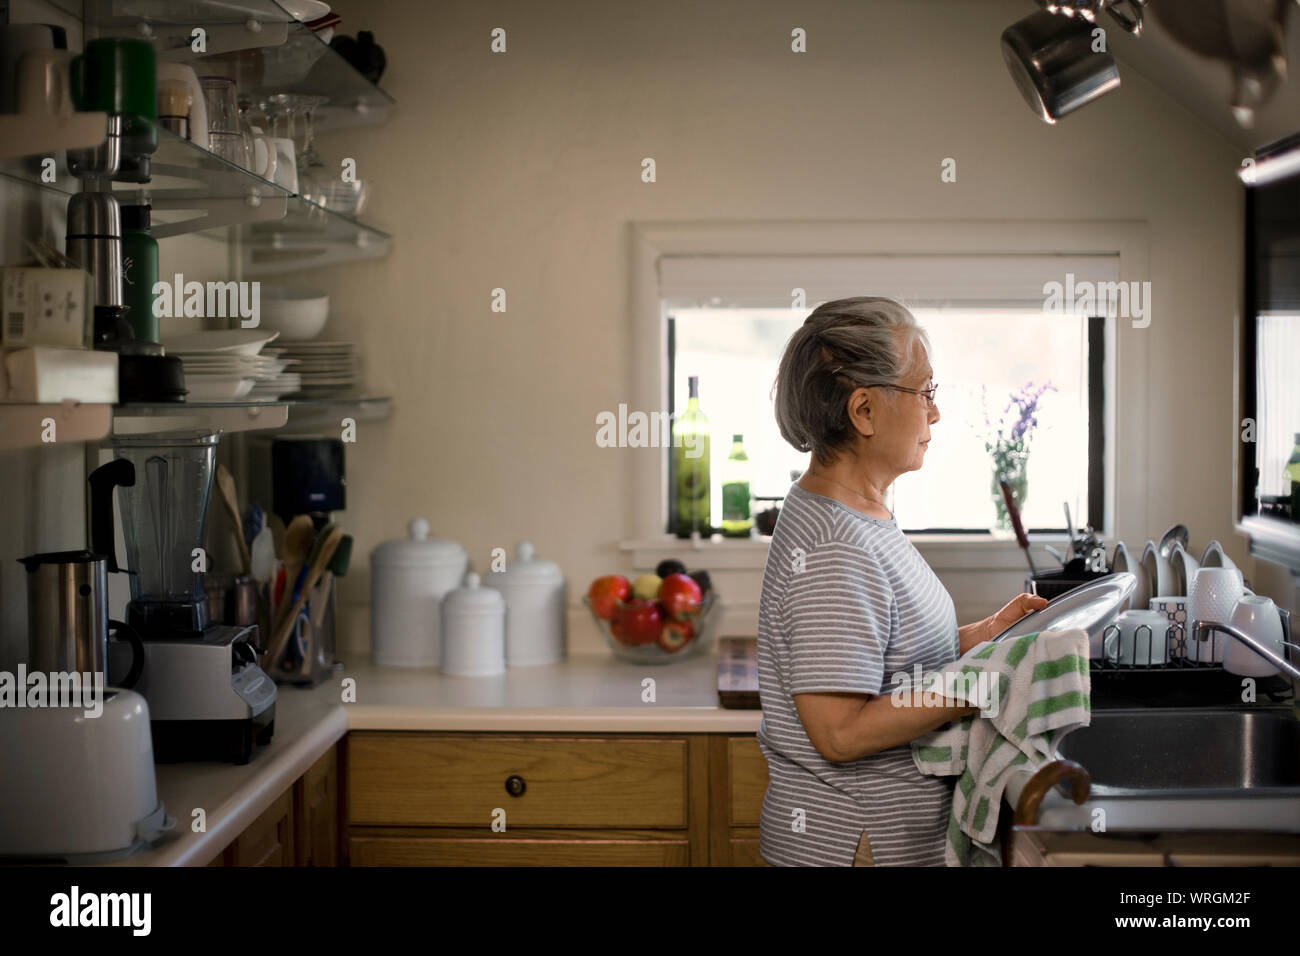 Contemplative senior woman washing dishes. Stock Photo